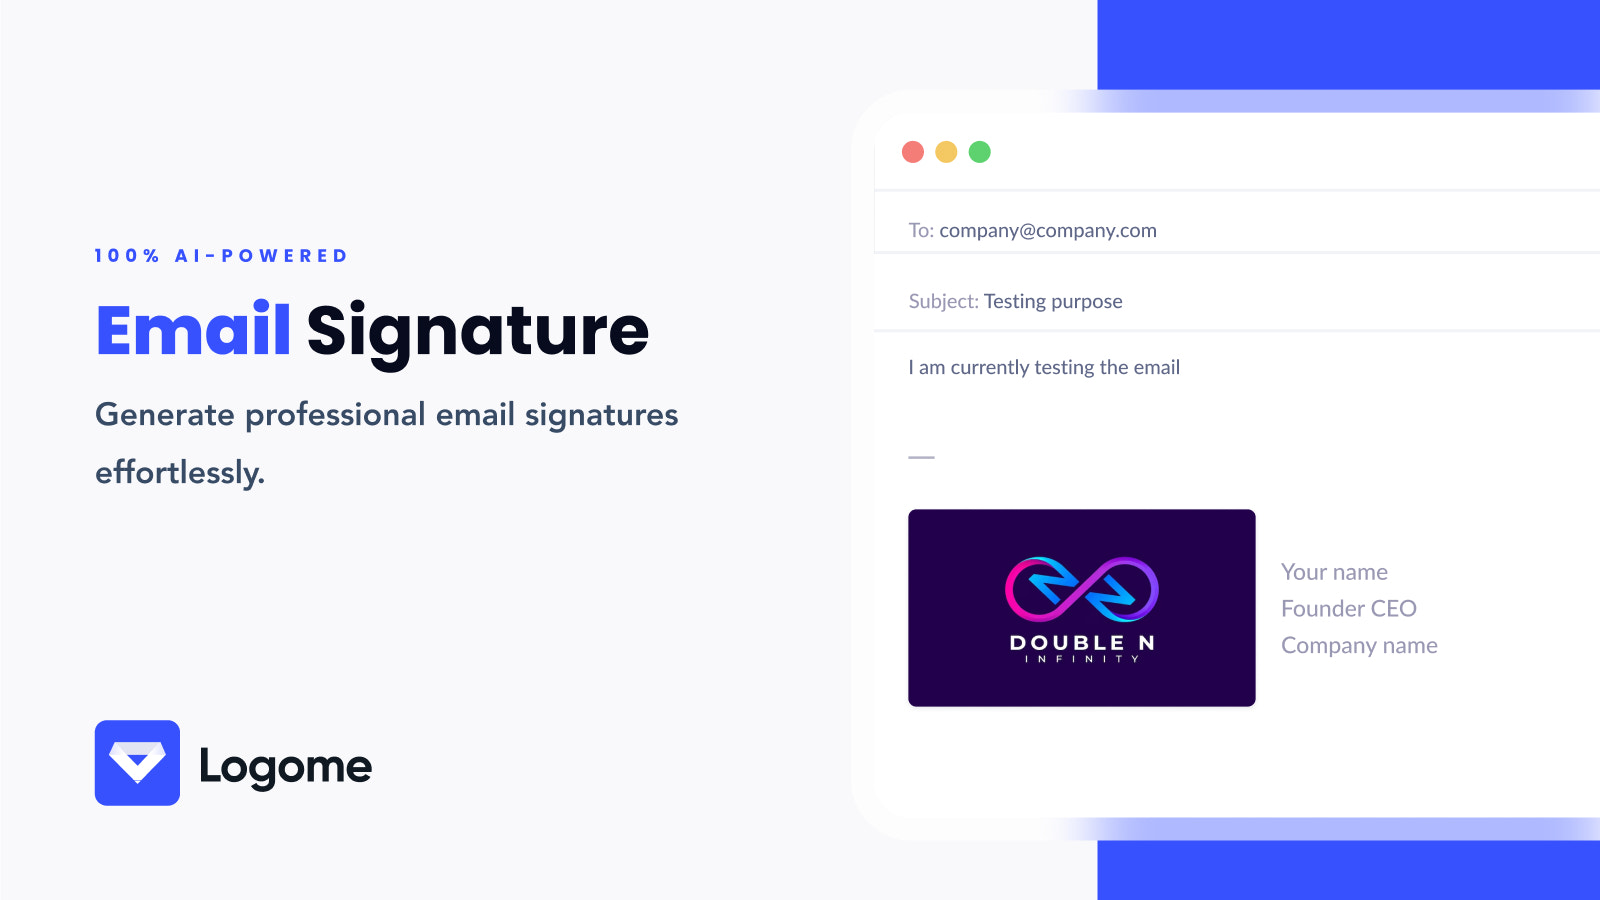 Create Email Signature in seconds.